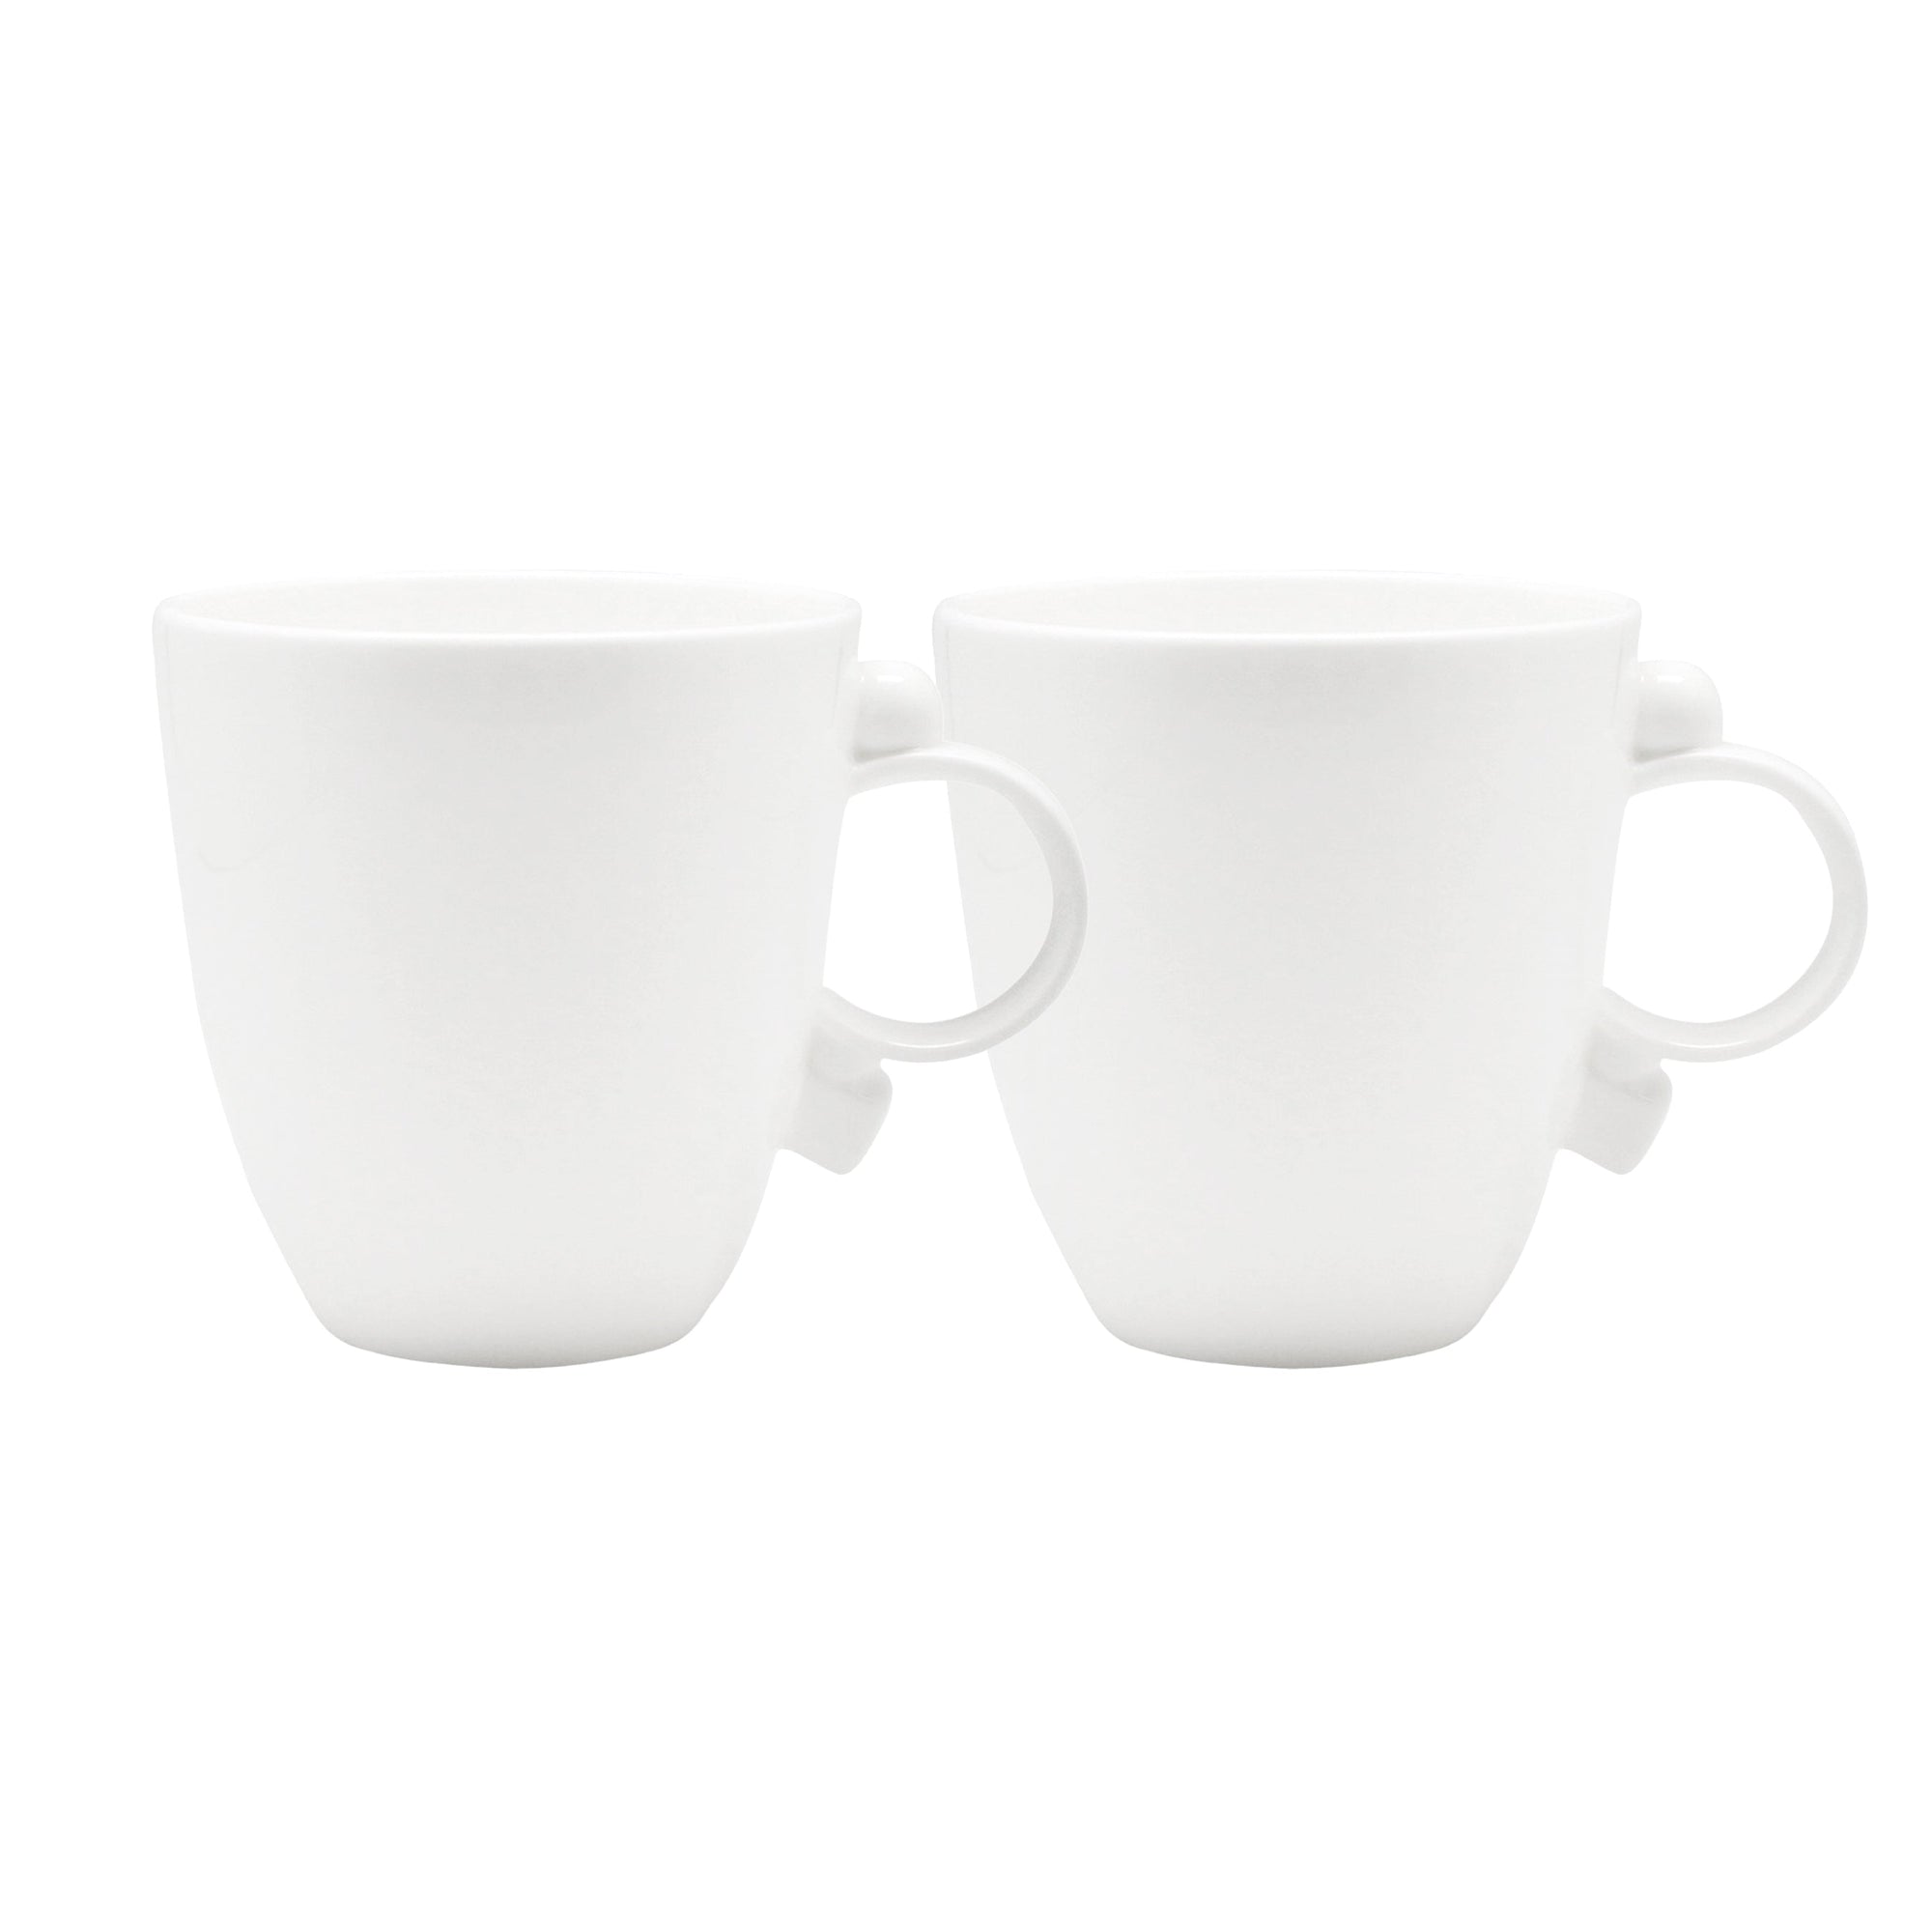 Prouna Geometrica Mug in White Set of 2 White Background Photo